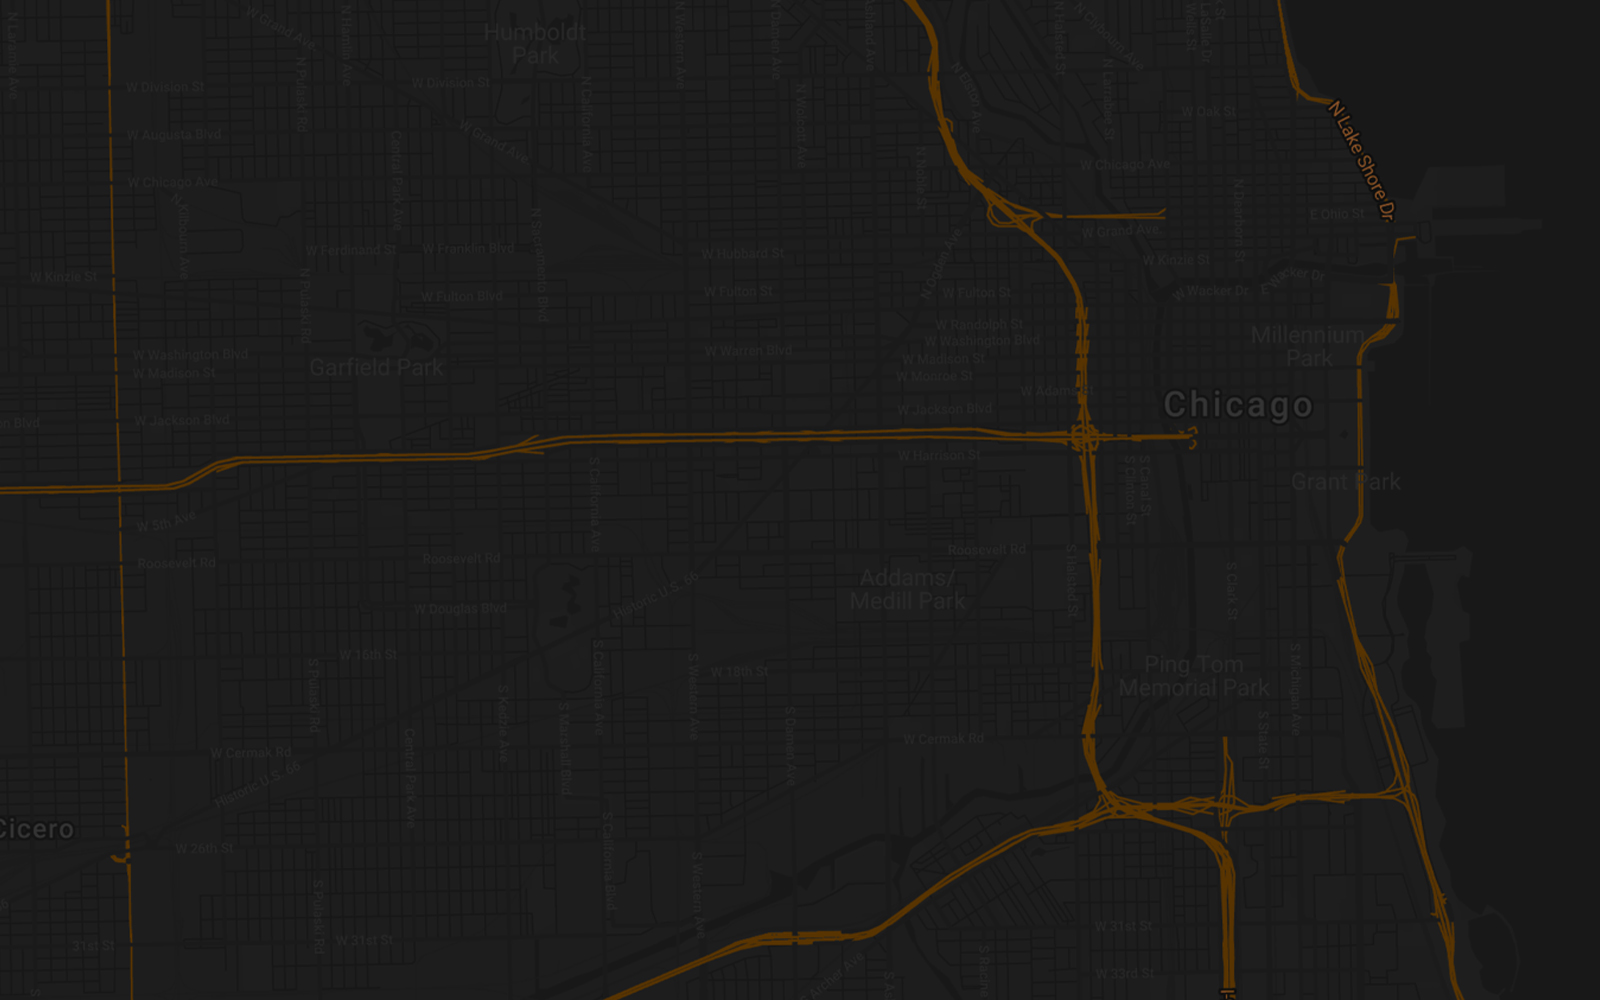 Google Maps Image of Chicago Area